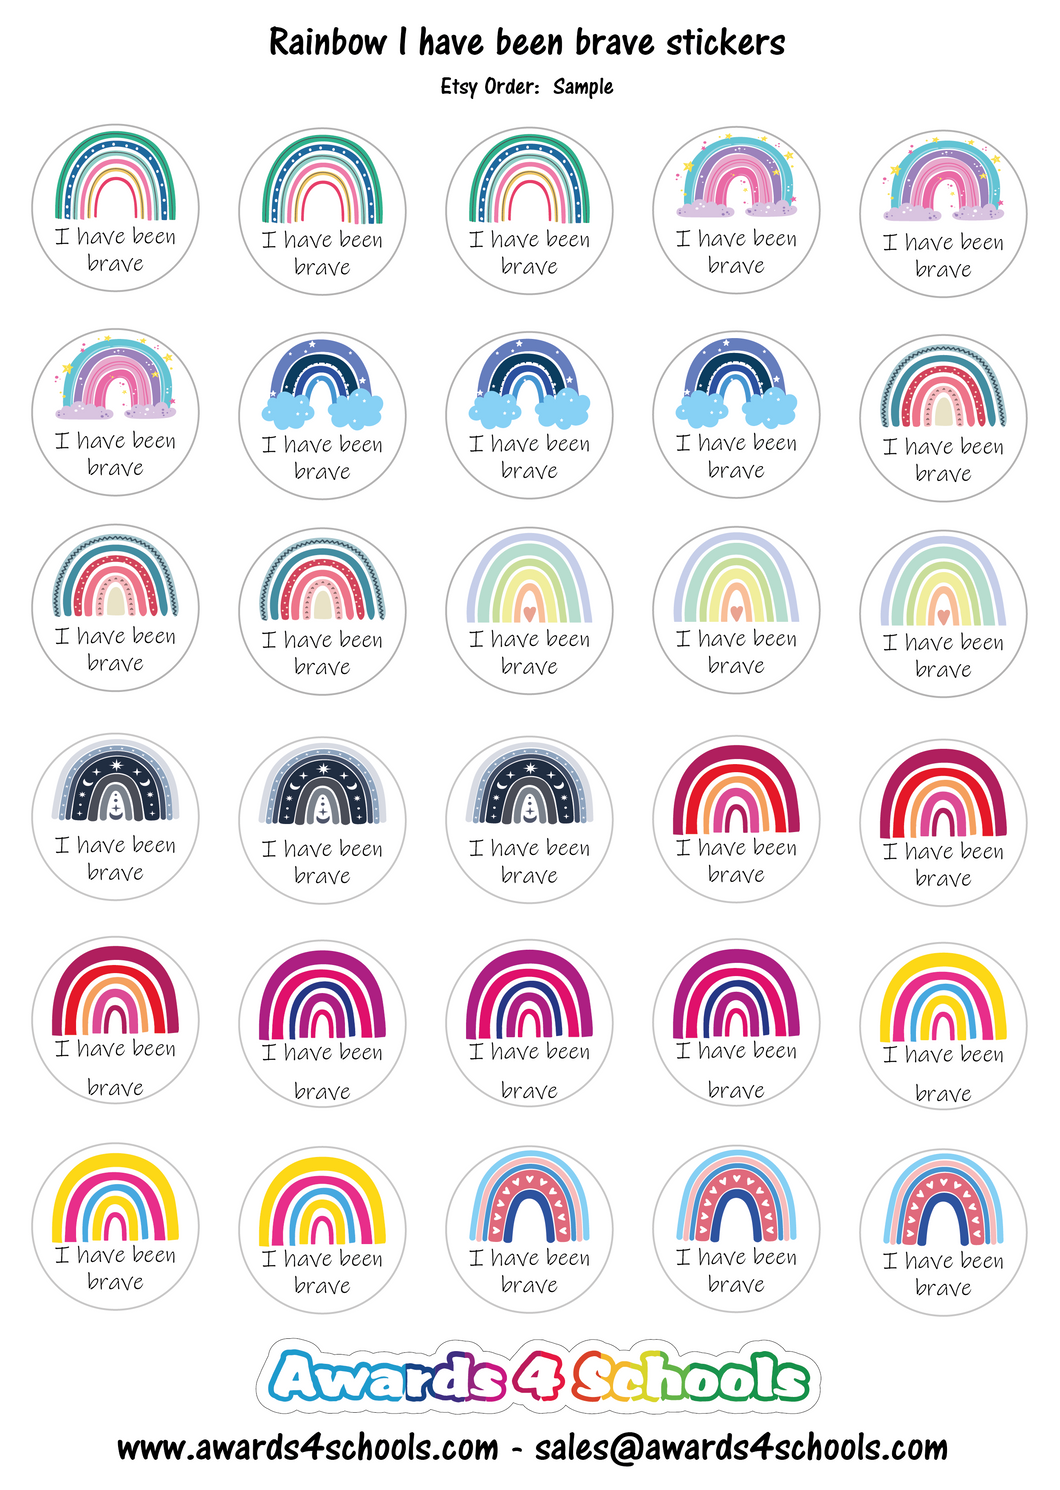 I was brave today stickers - Rainbow Design